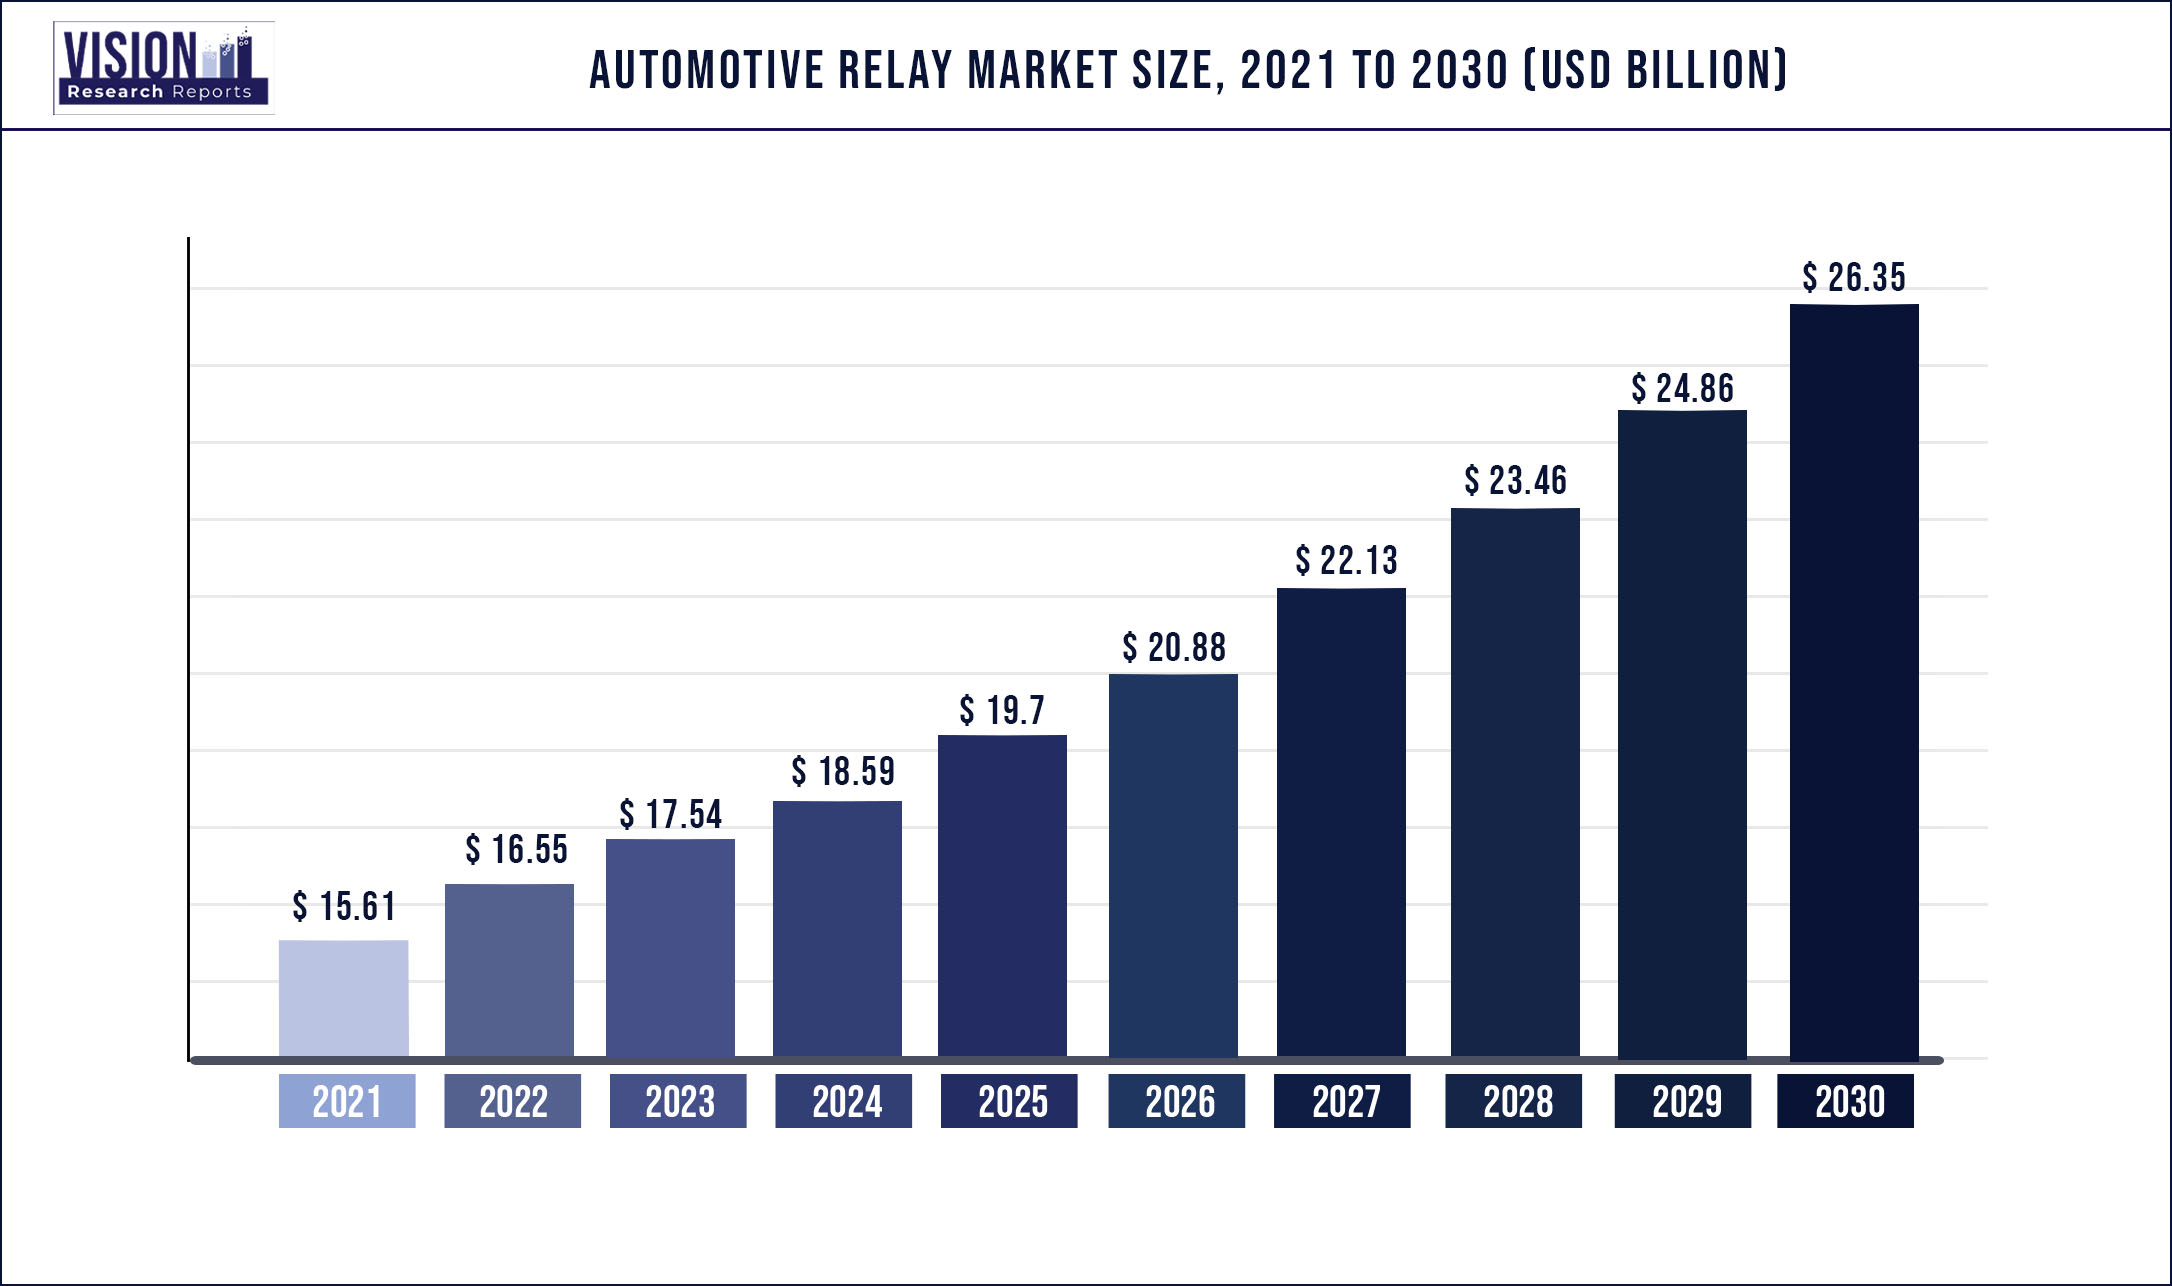 Automotive Relay Market Size 2021 to 2030